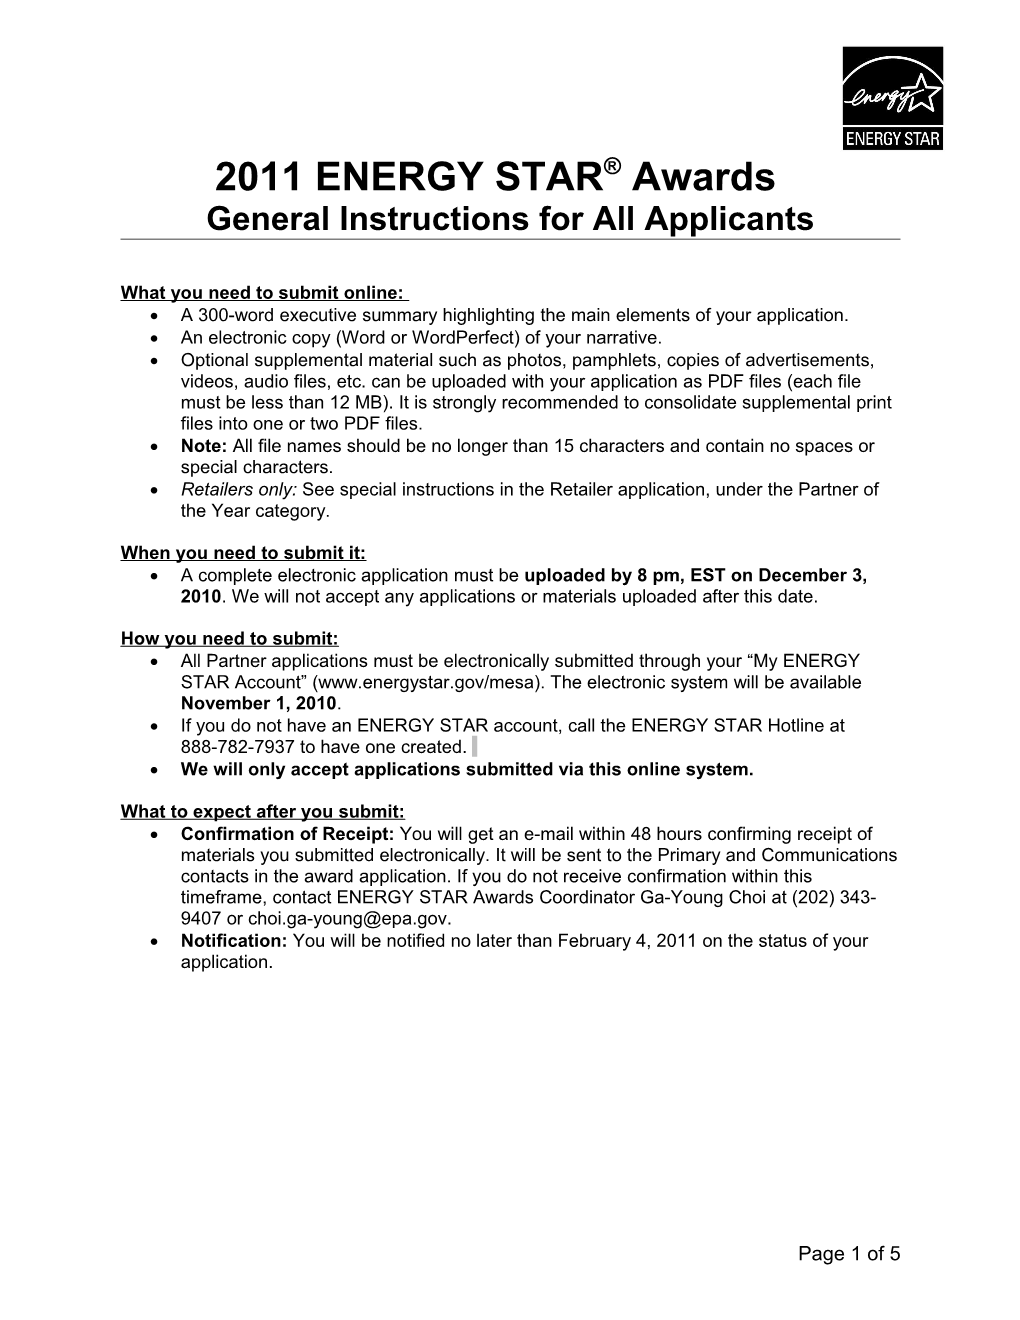 2007 ENERGY STAR Award Application